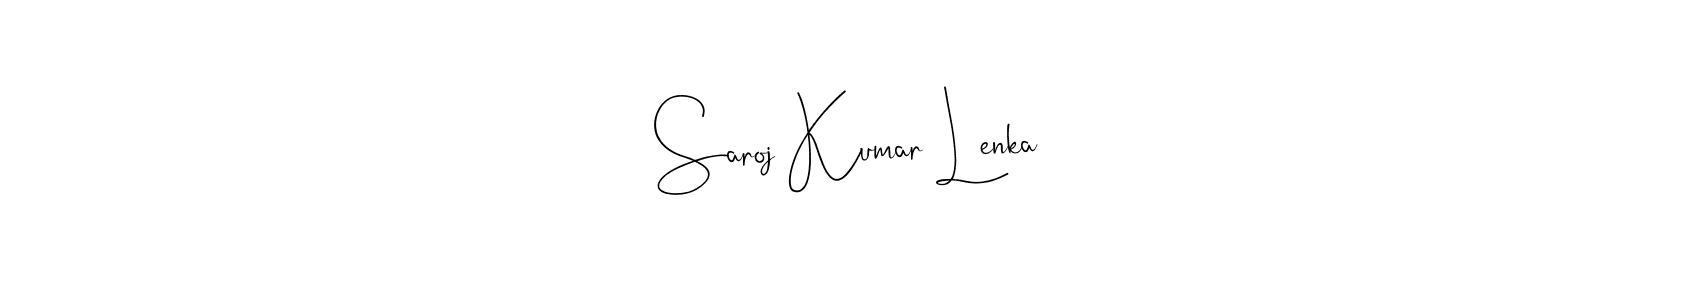 Make a beautiful signature design for name Saroj Kumar Lenka. Use this online signature maker to create a handwritten signature for free. Saroj Kumar Lenka signature style 4 images and pictures png